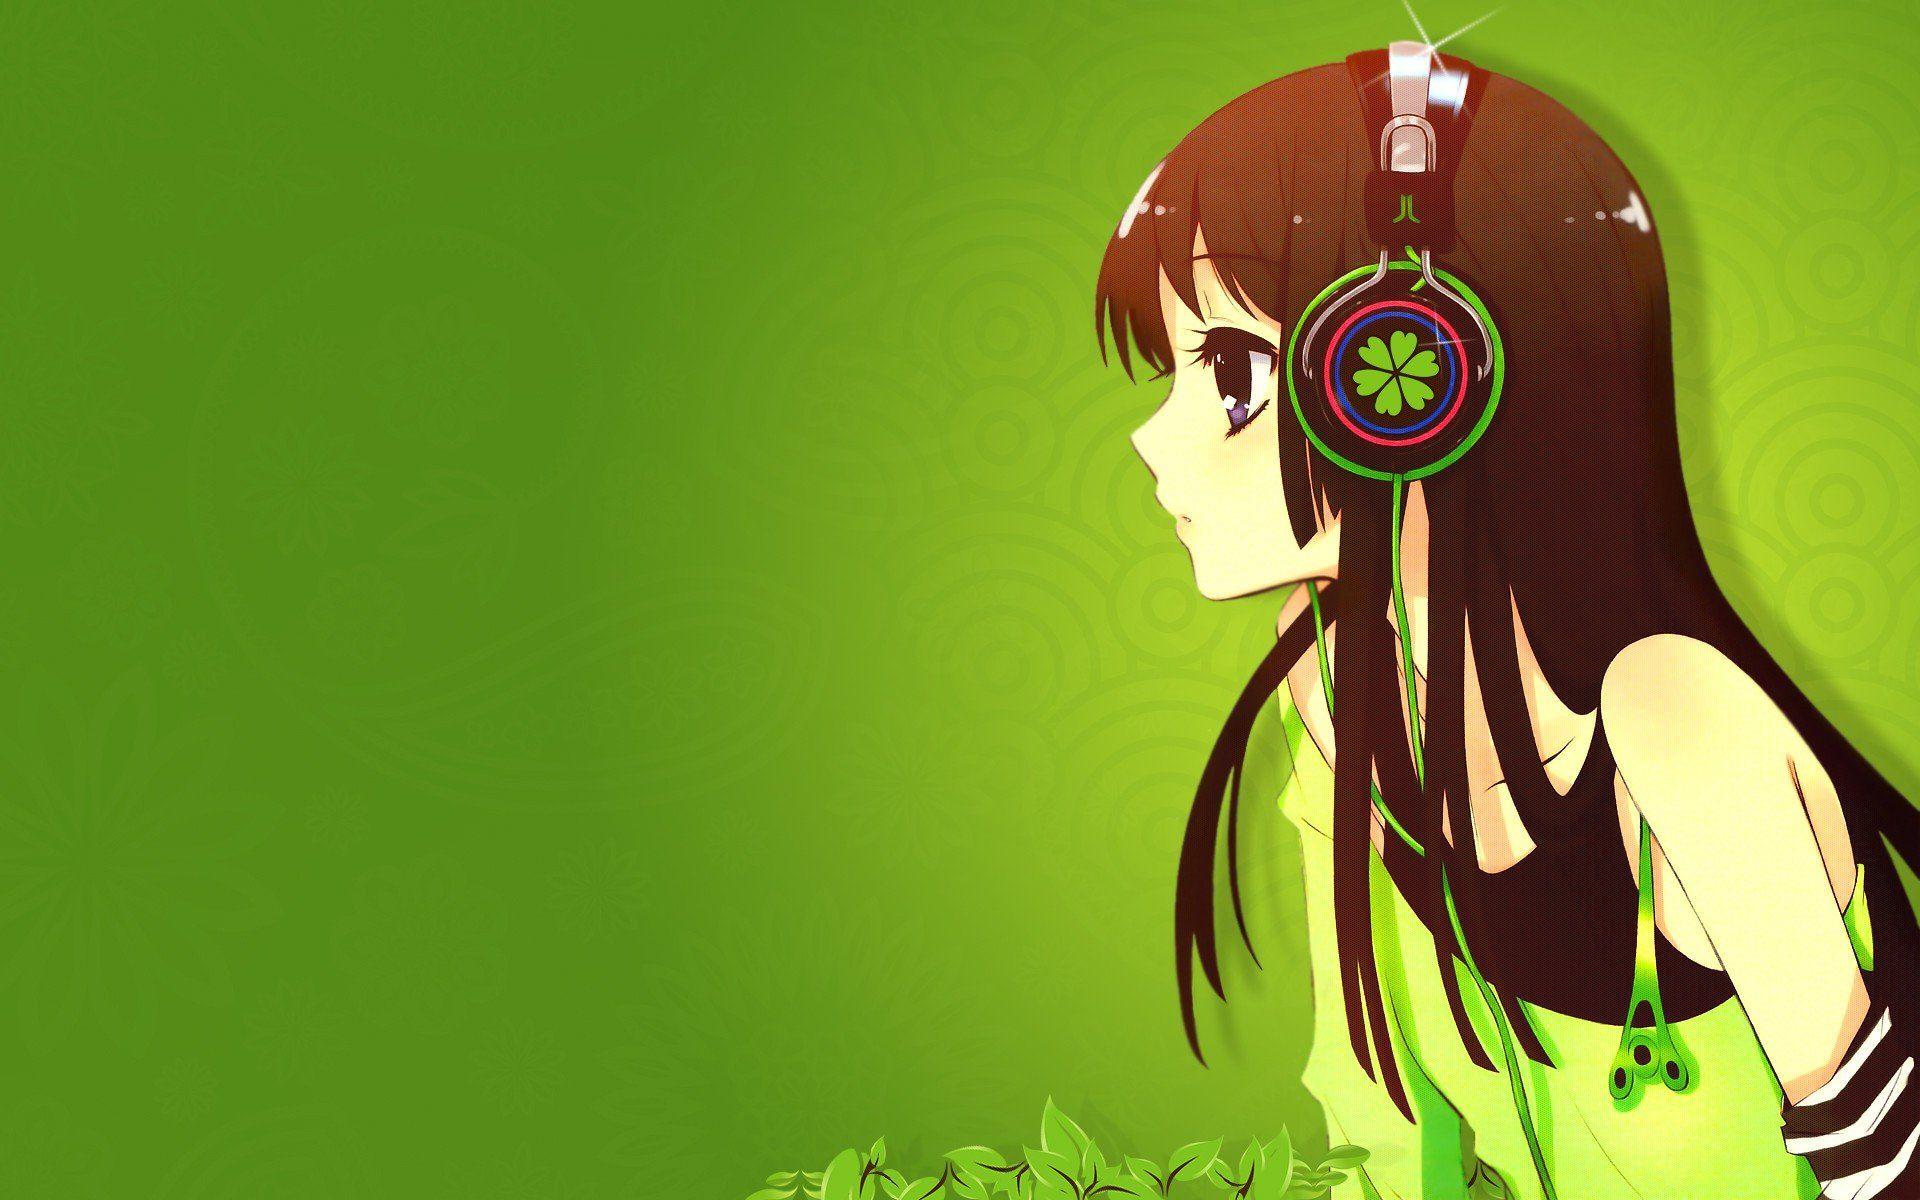 Cute Anime Girl With Headphones Wallpaper HD Id. Frenzia